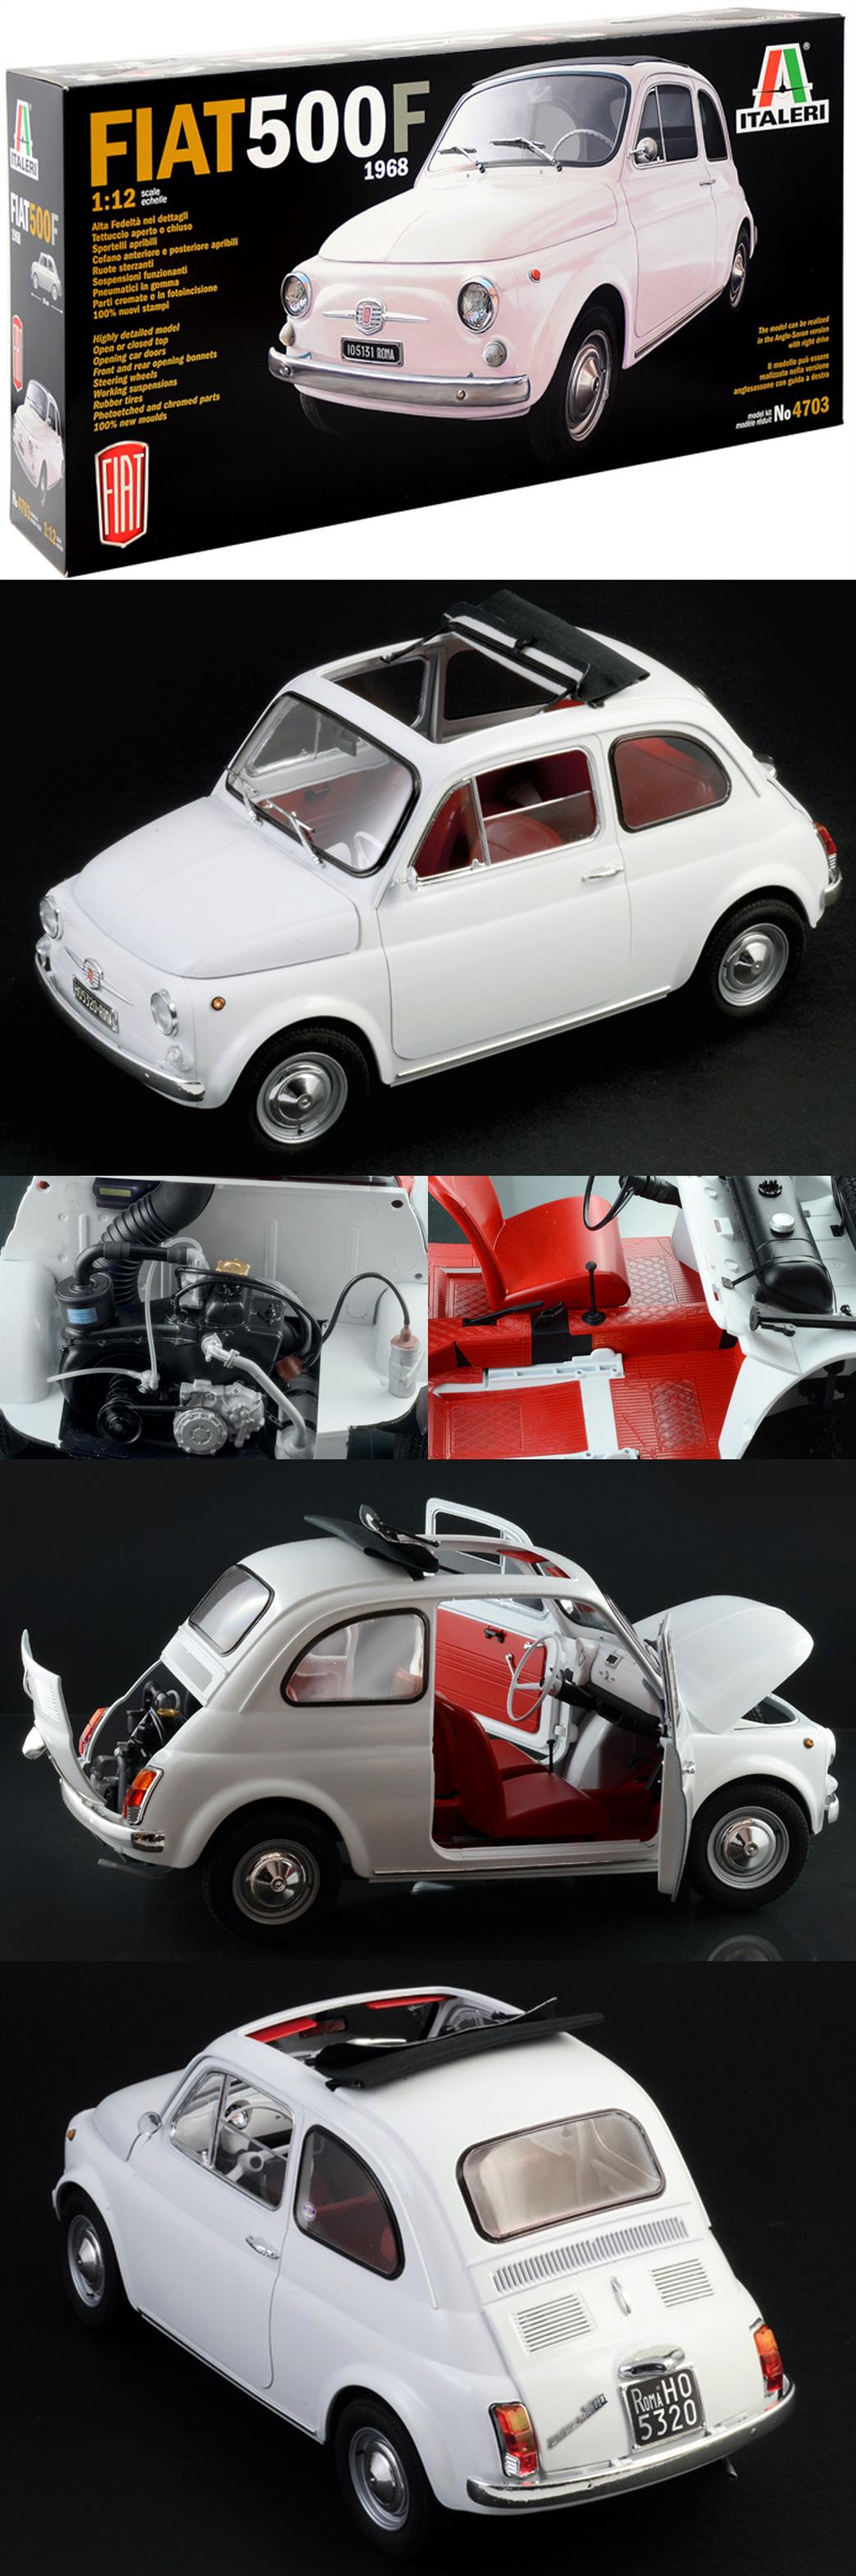 Italeri 1/12 4703 Fiat 500F Car kit